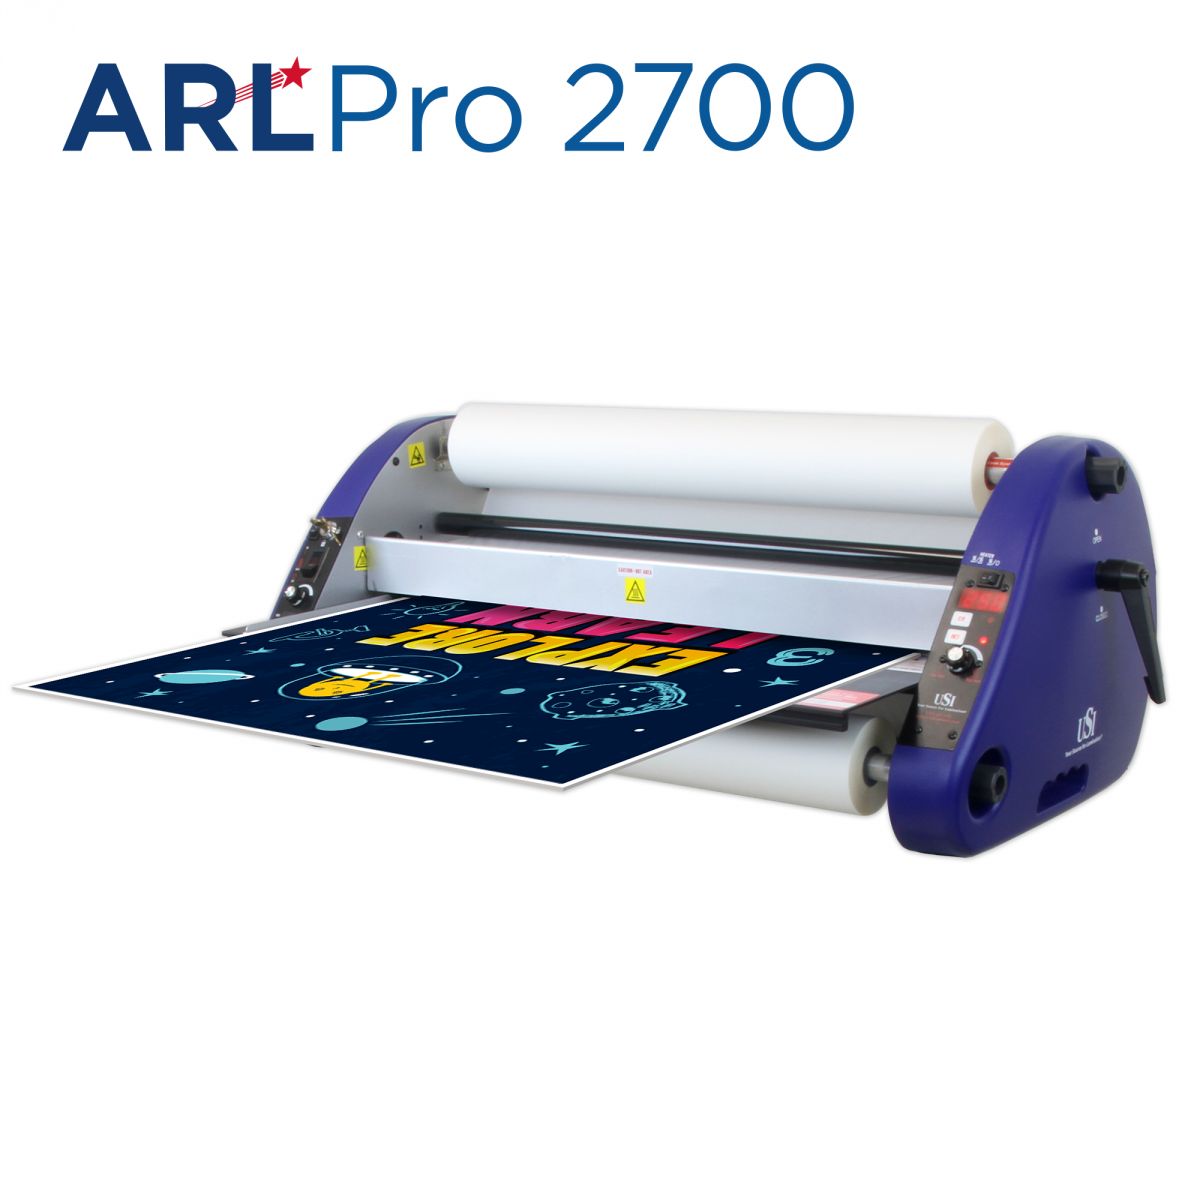 USI ARL Pro 2700 27" Mounting Roll Laminator $1,811.76